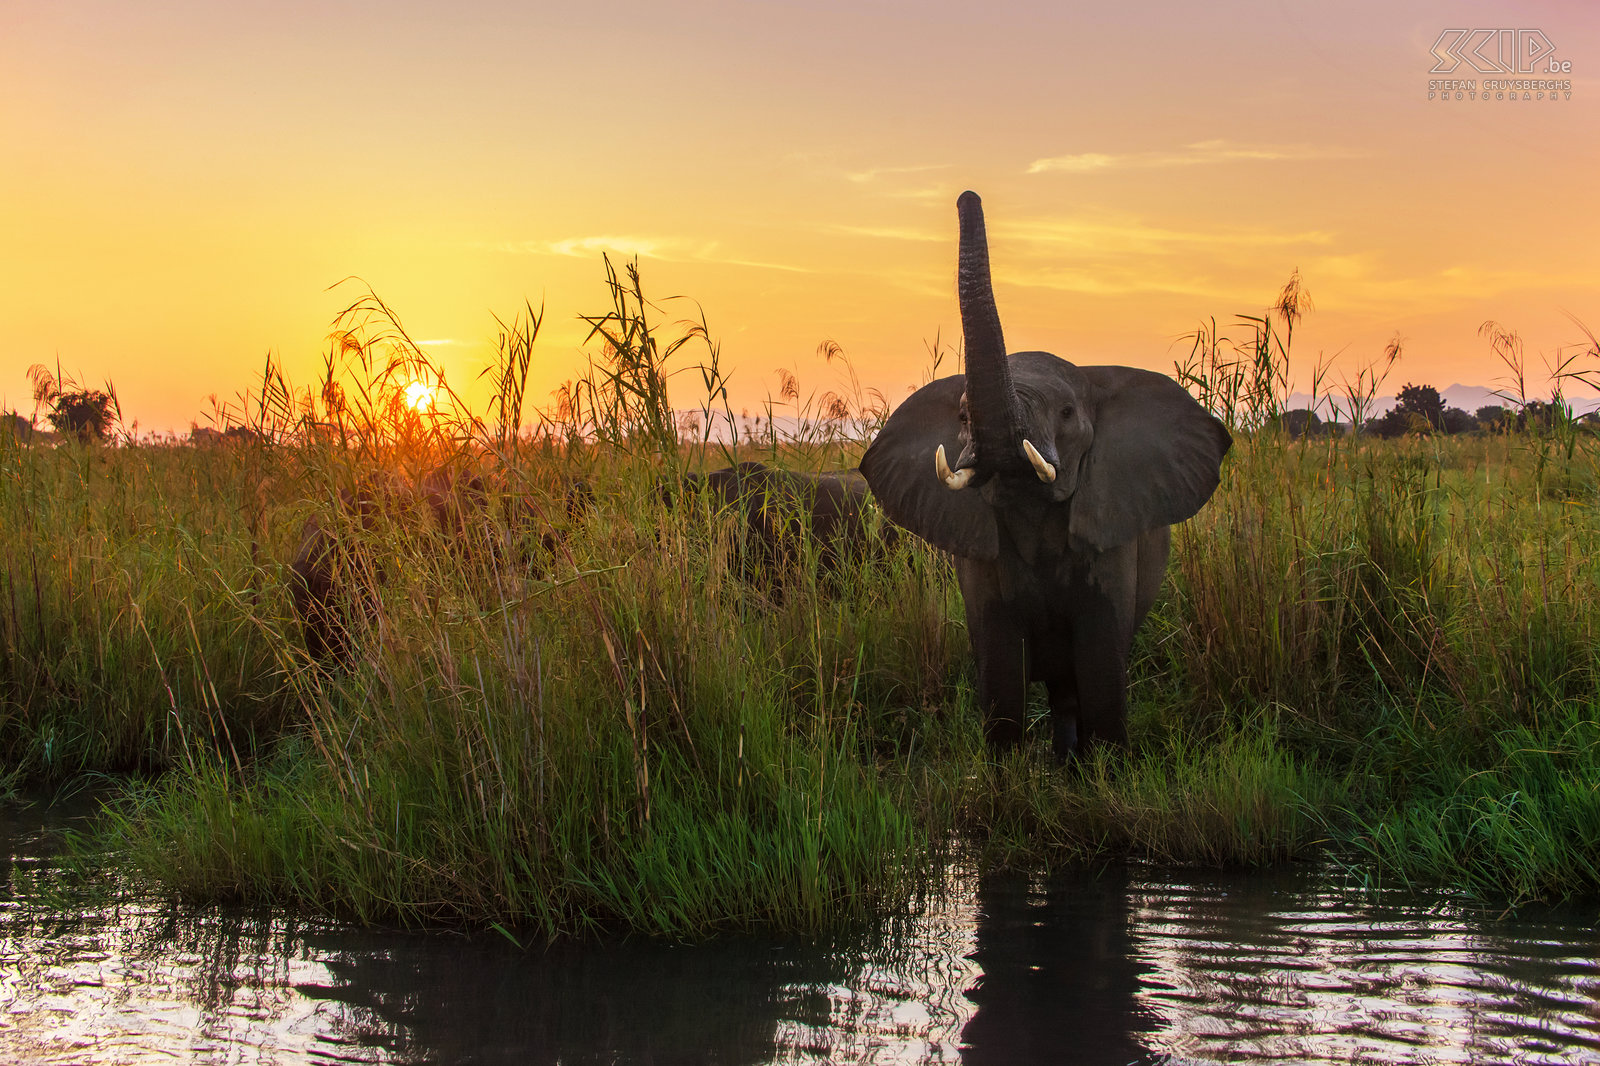 Lower Zambezi - Olifant bij zonsondergang De zonsondergang aan de rivier was wondermooi en we zagen een groep olifanten aan de rivieroever drinken. Stefan Cruysberghs